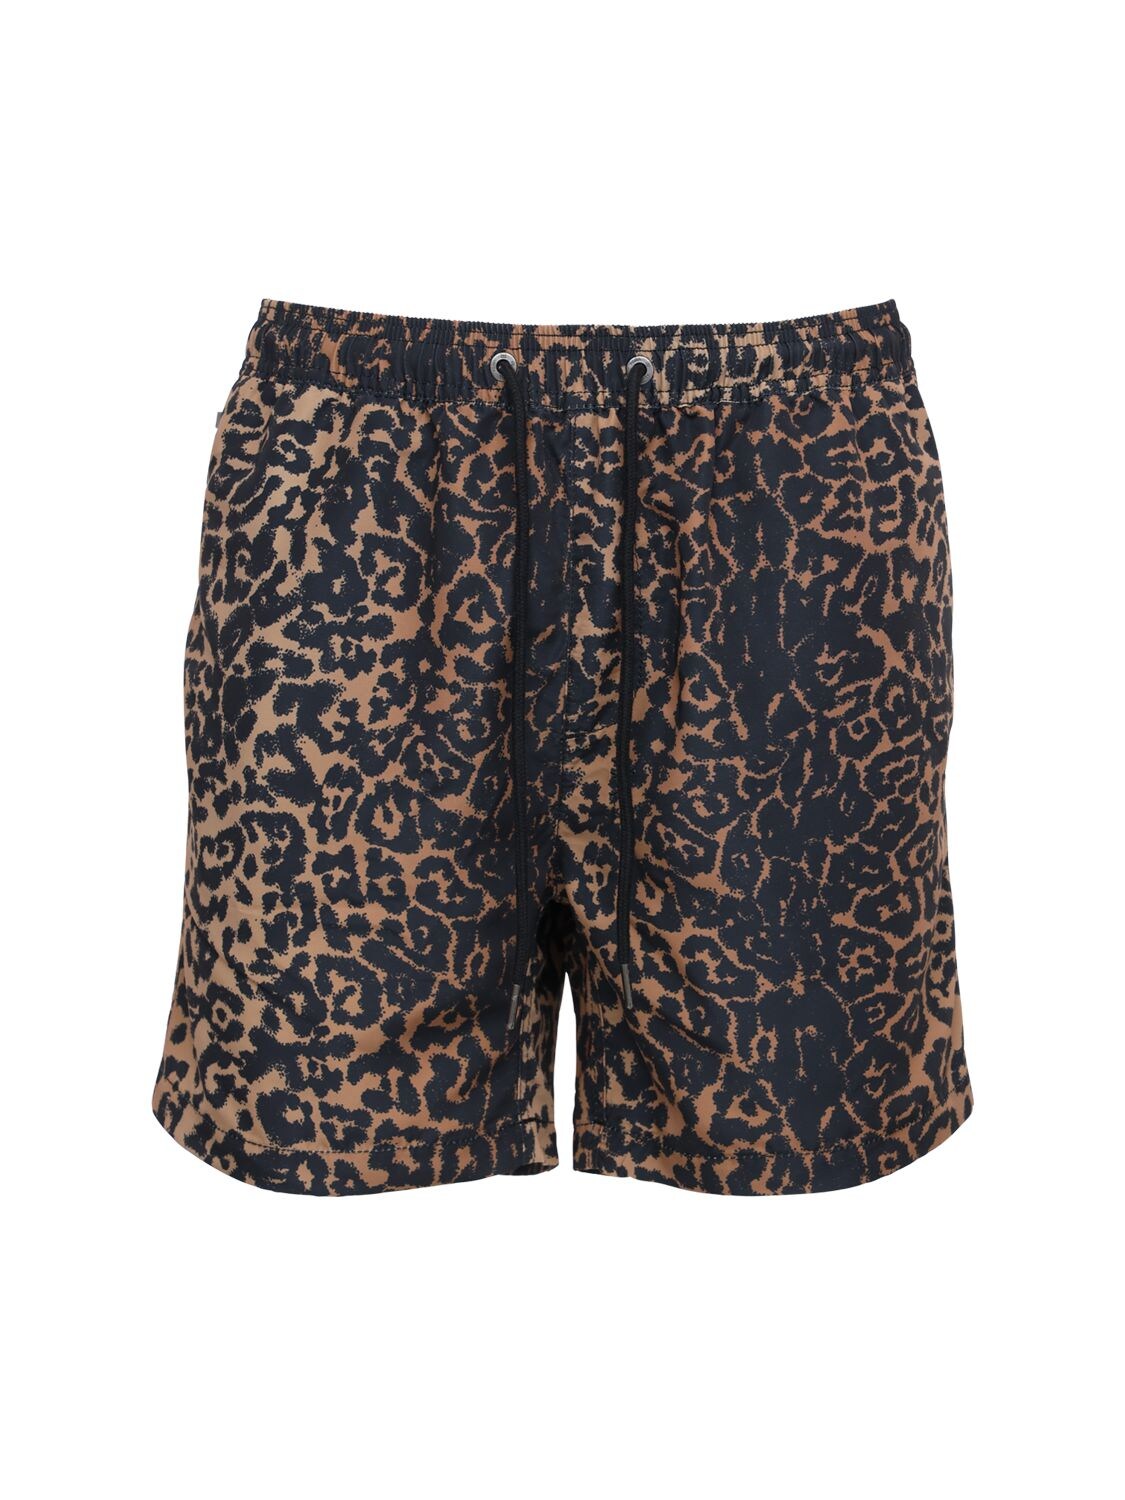 Prowler Leopard Printed Boardshorts